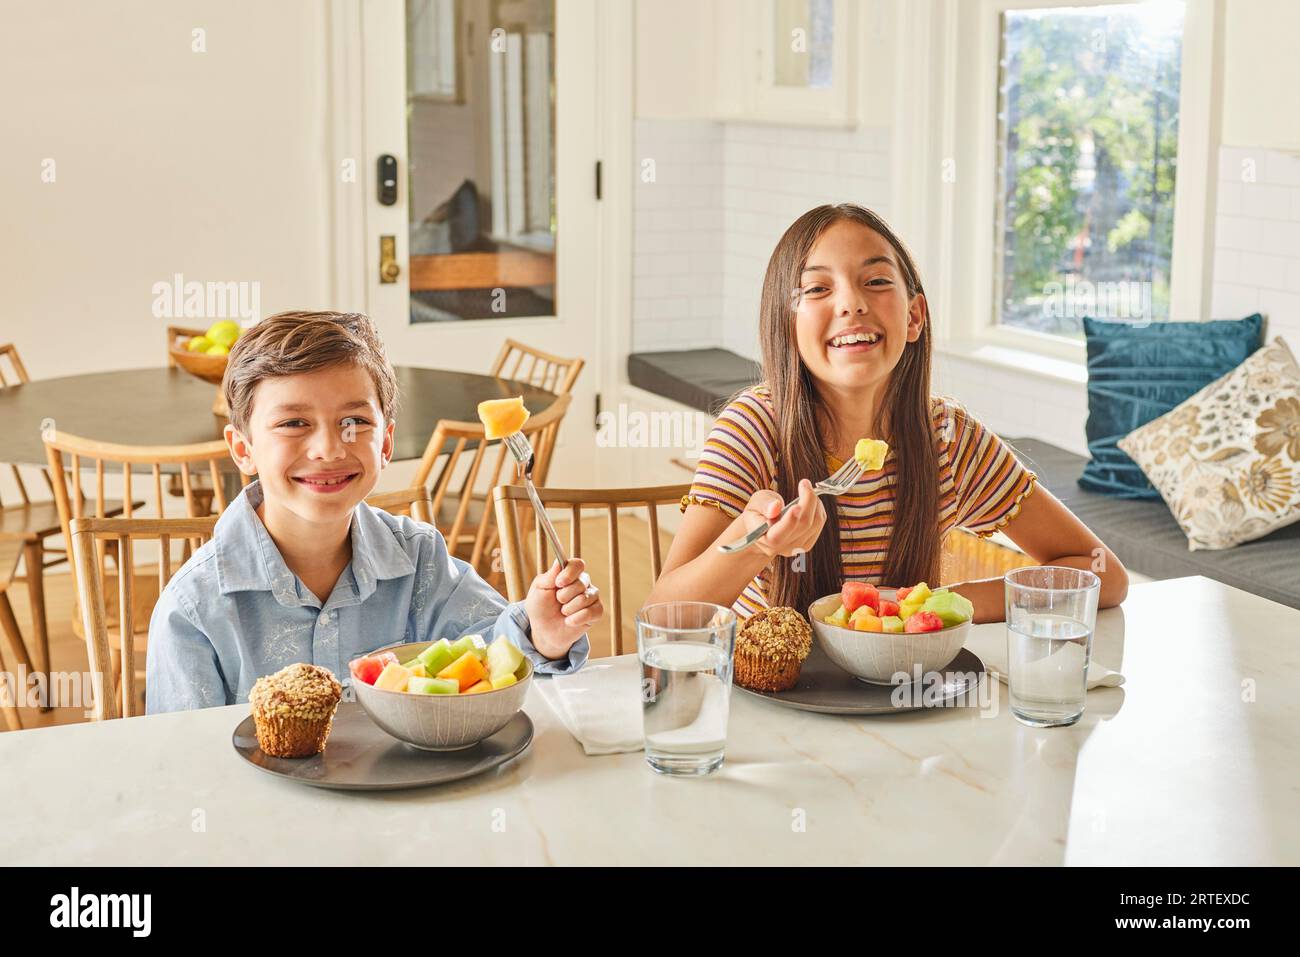 Smiling boy (8-9) and girl (12-13) enjoying breakfast in kitchen Stock Photo